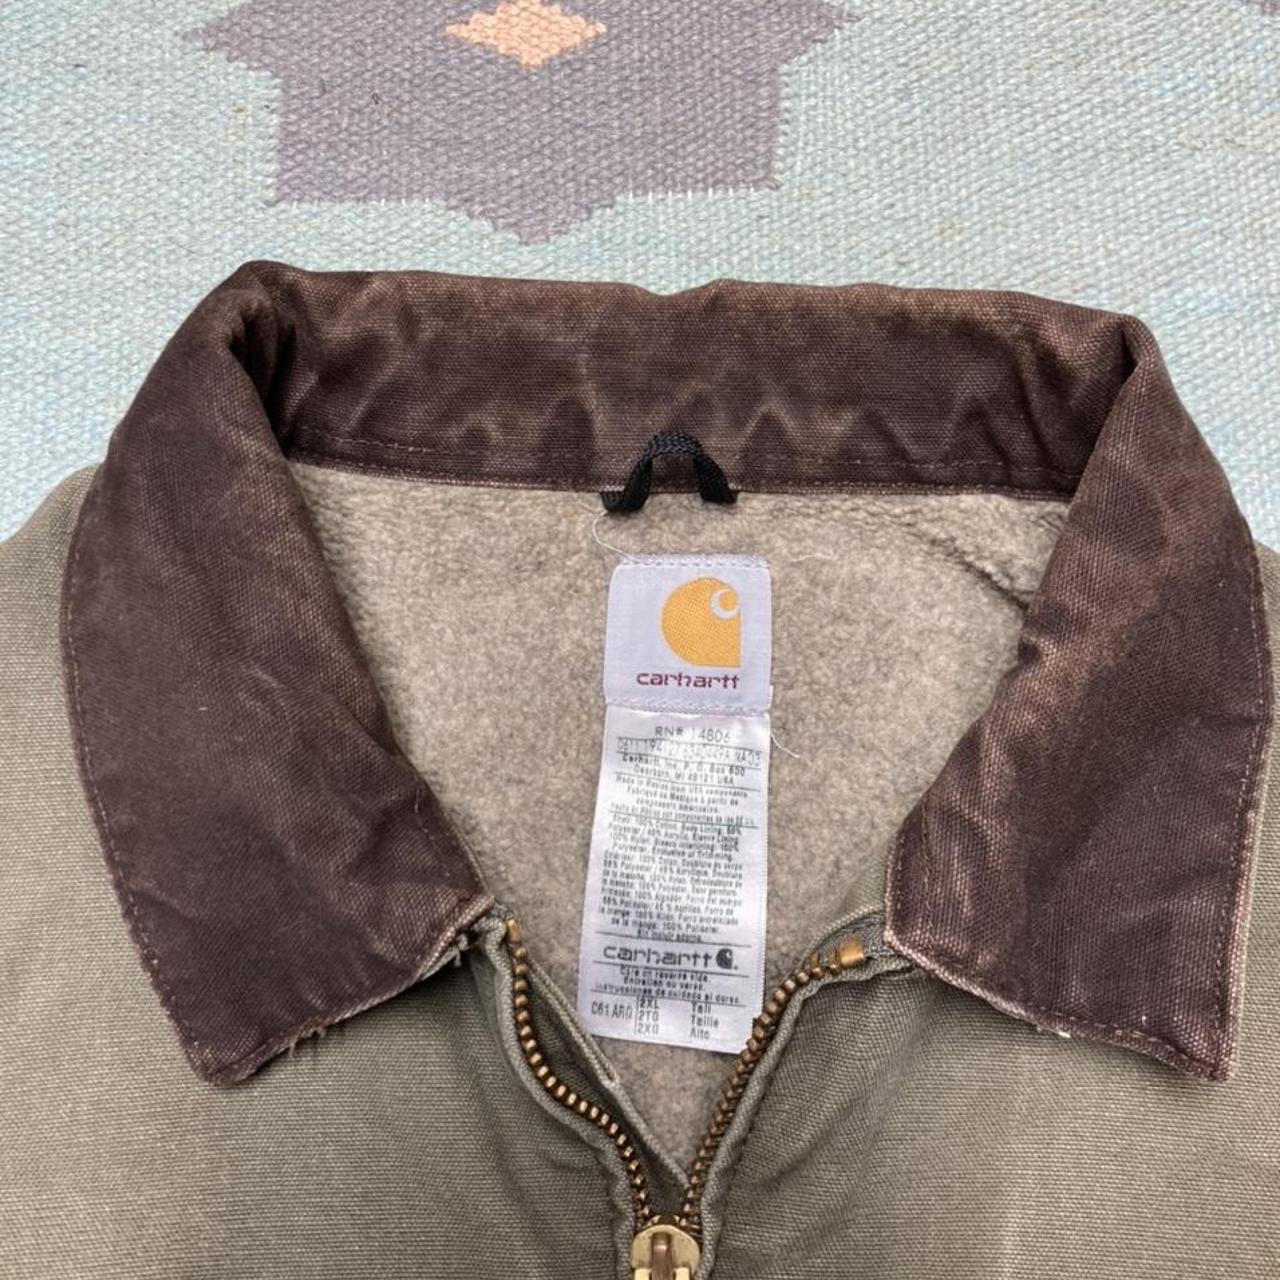 Vintage carhartt jacket Detroit Sherpa lined... - Depop